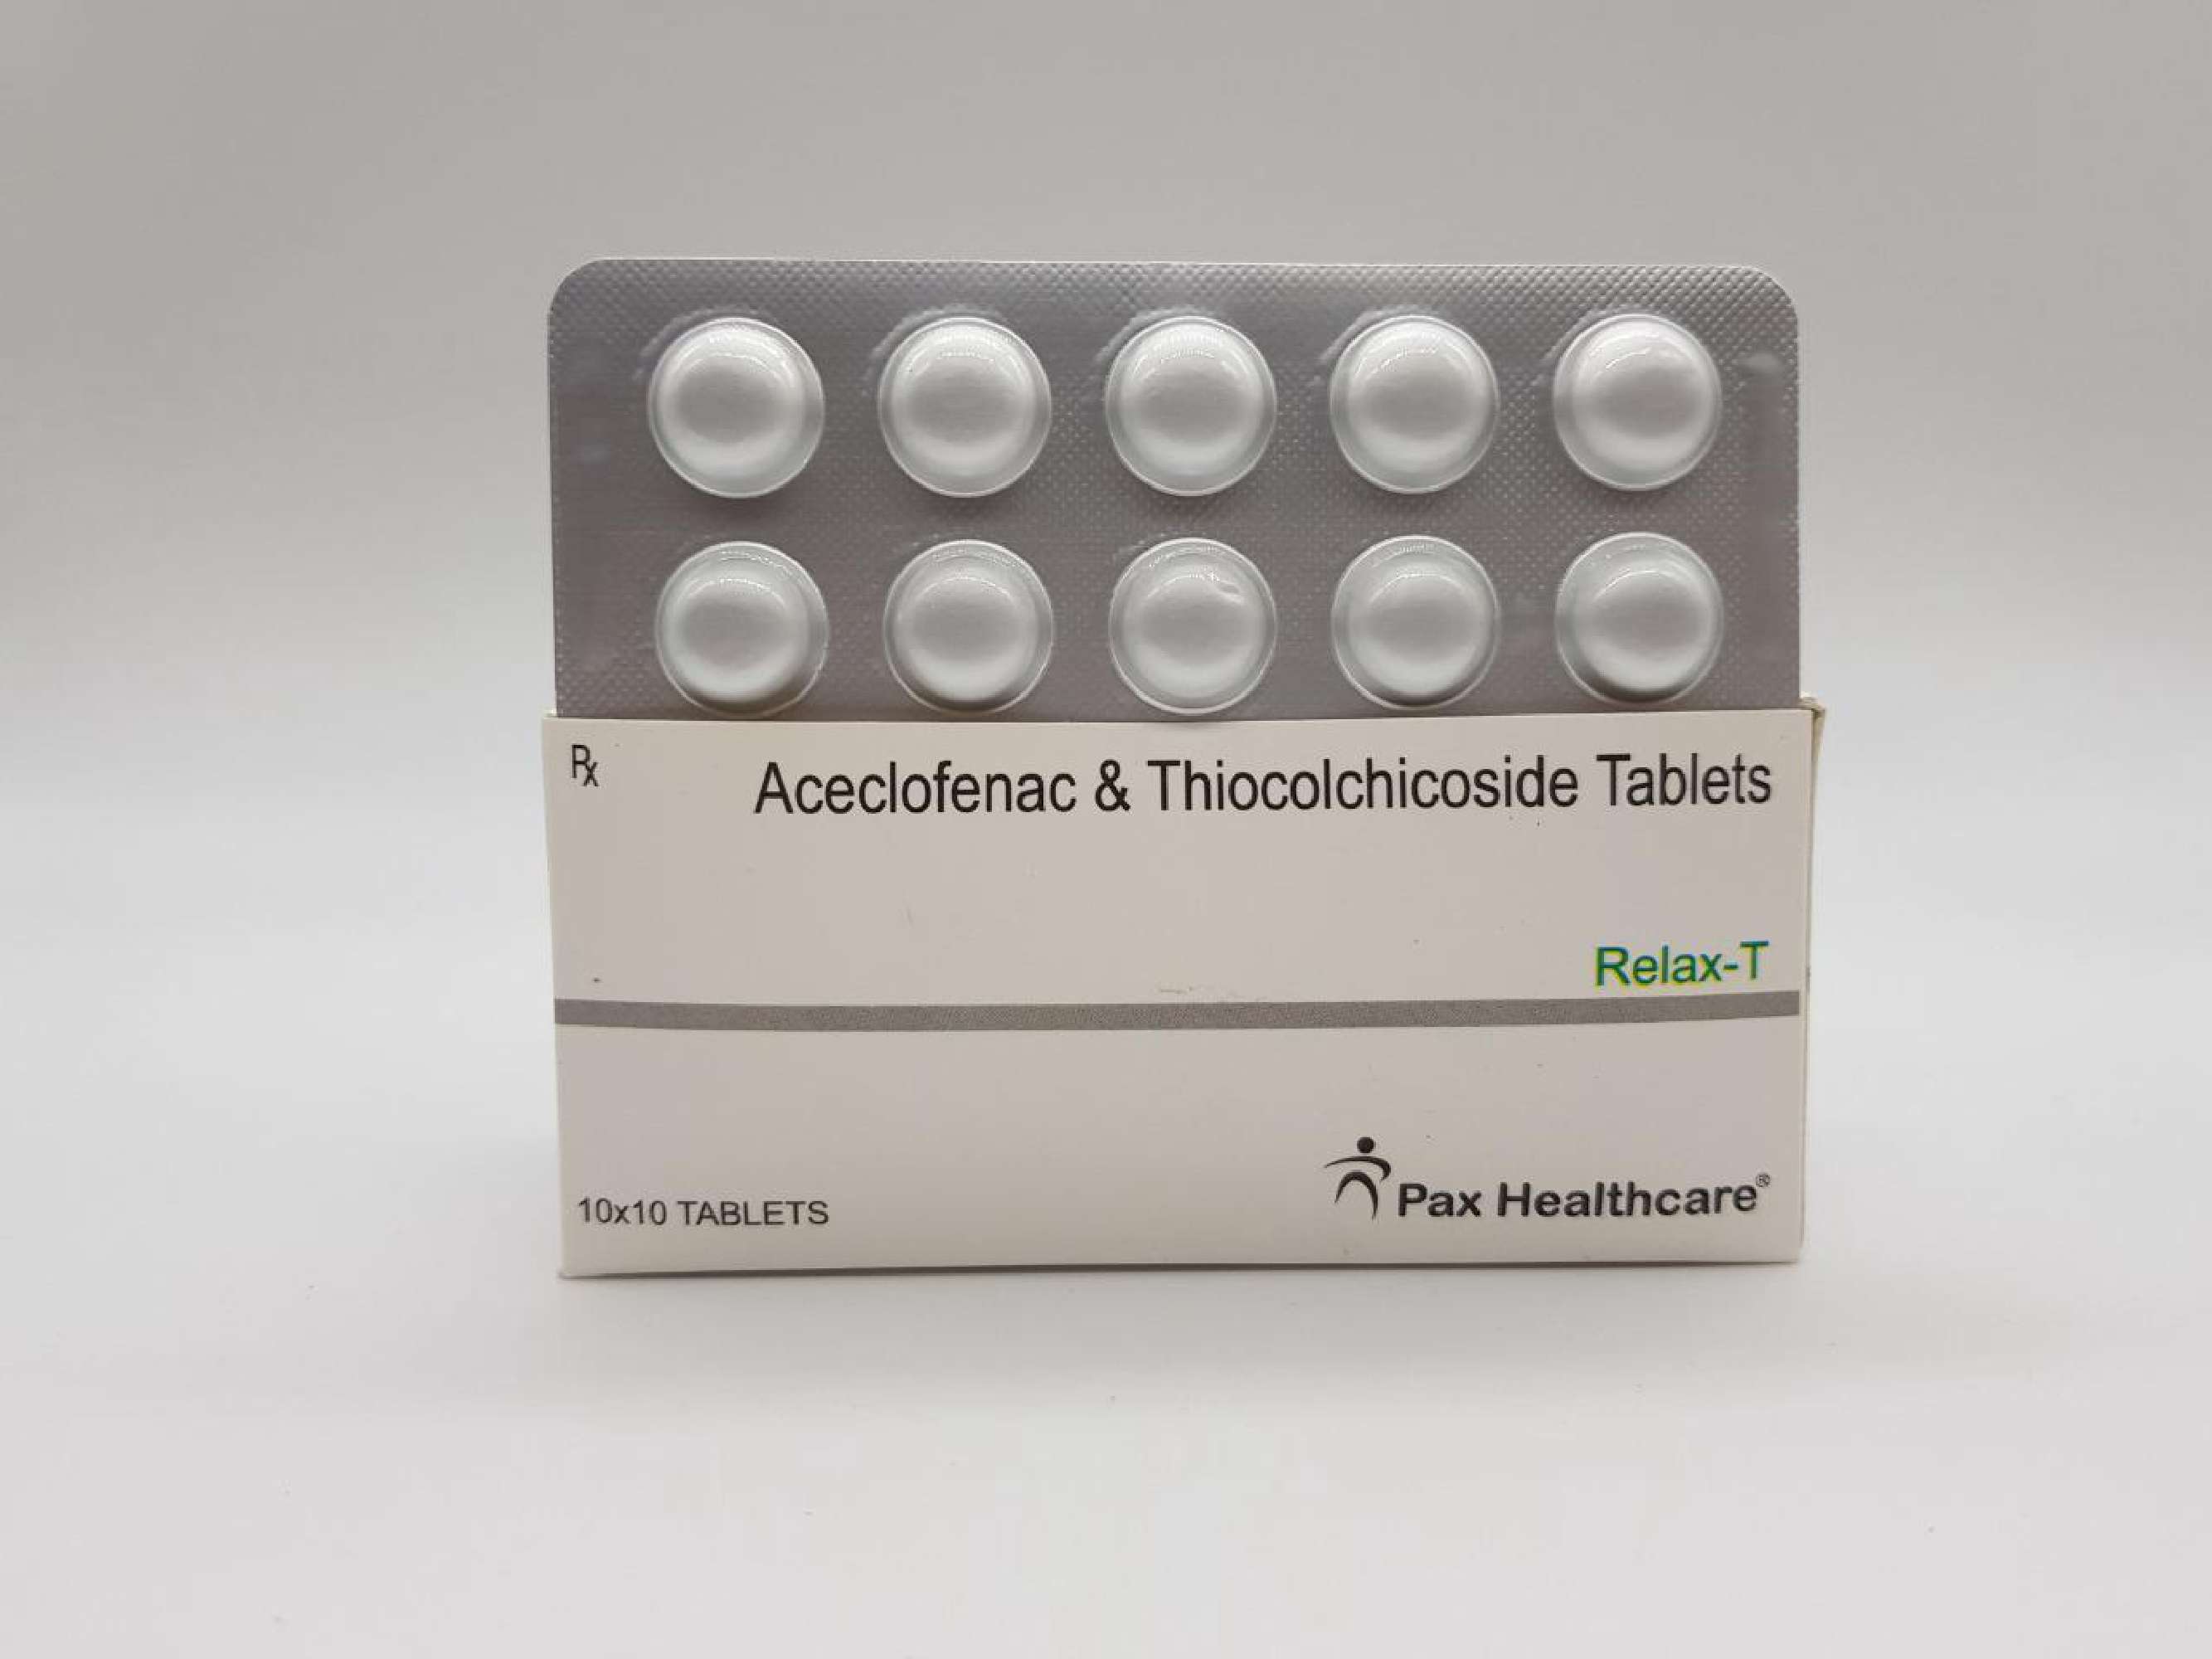 acelofenac 100mg, thiocolchicoside 4mg